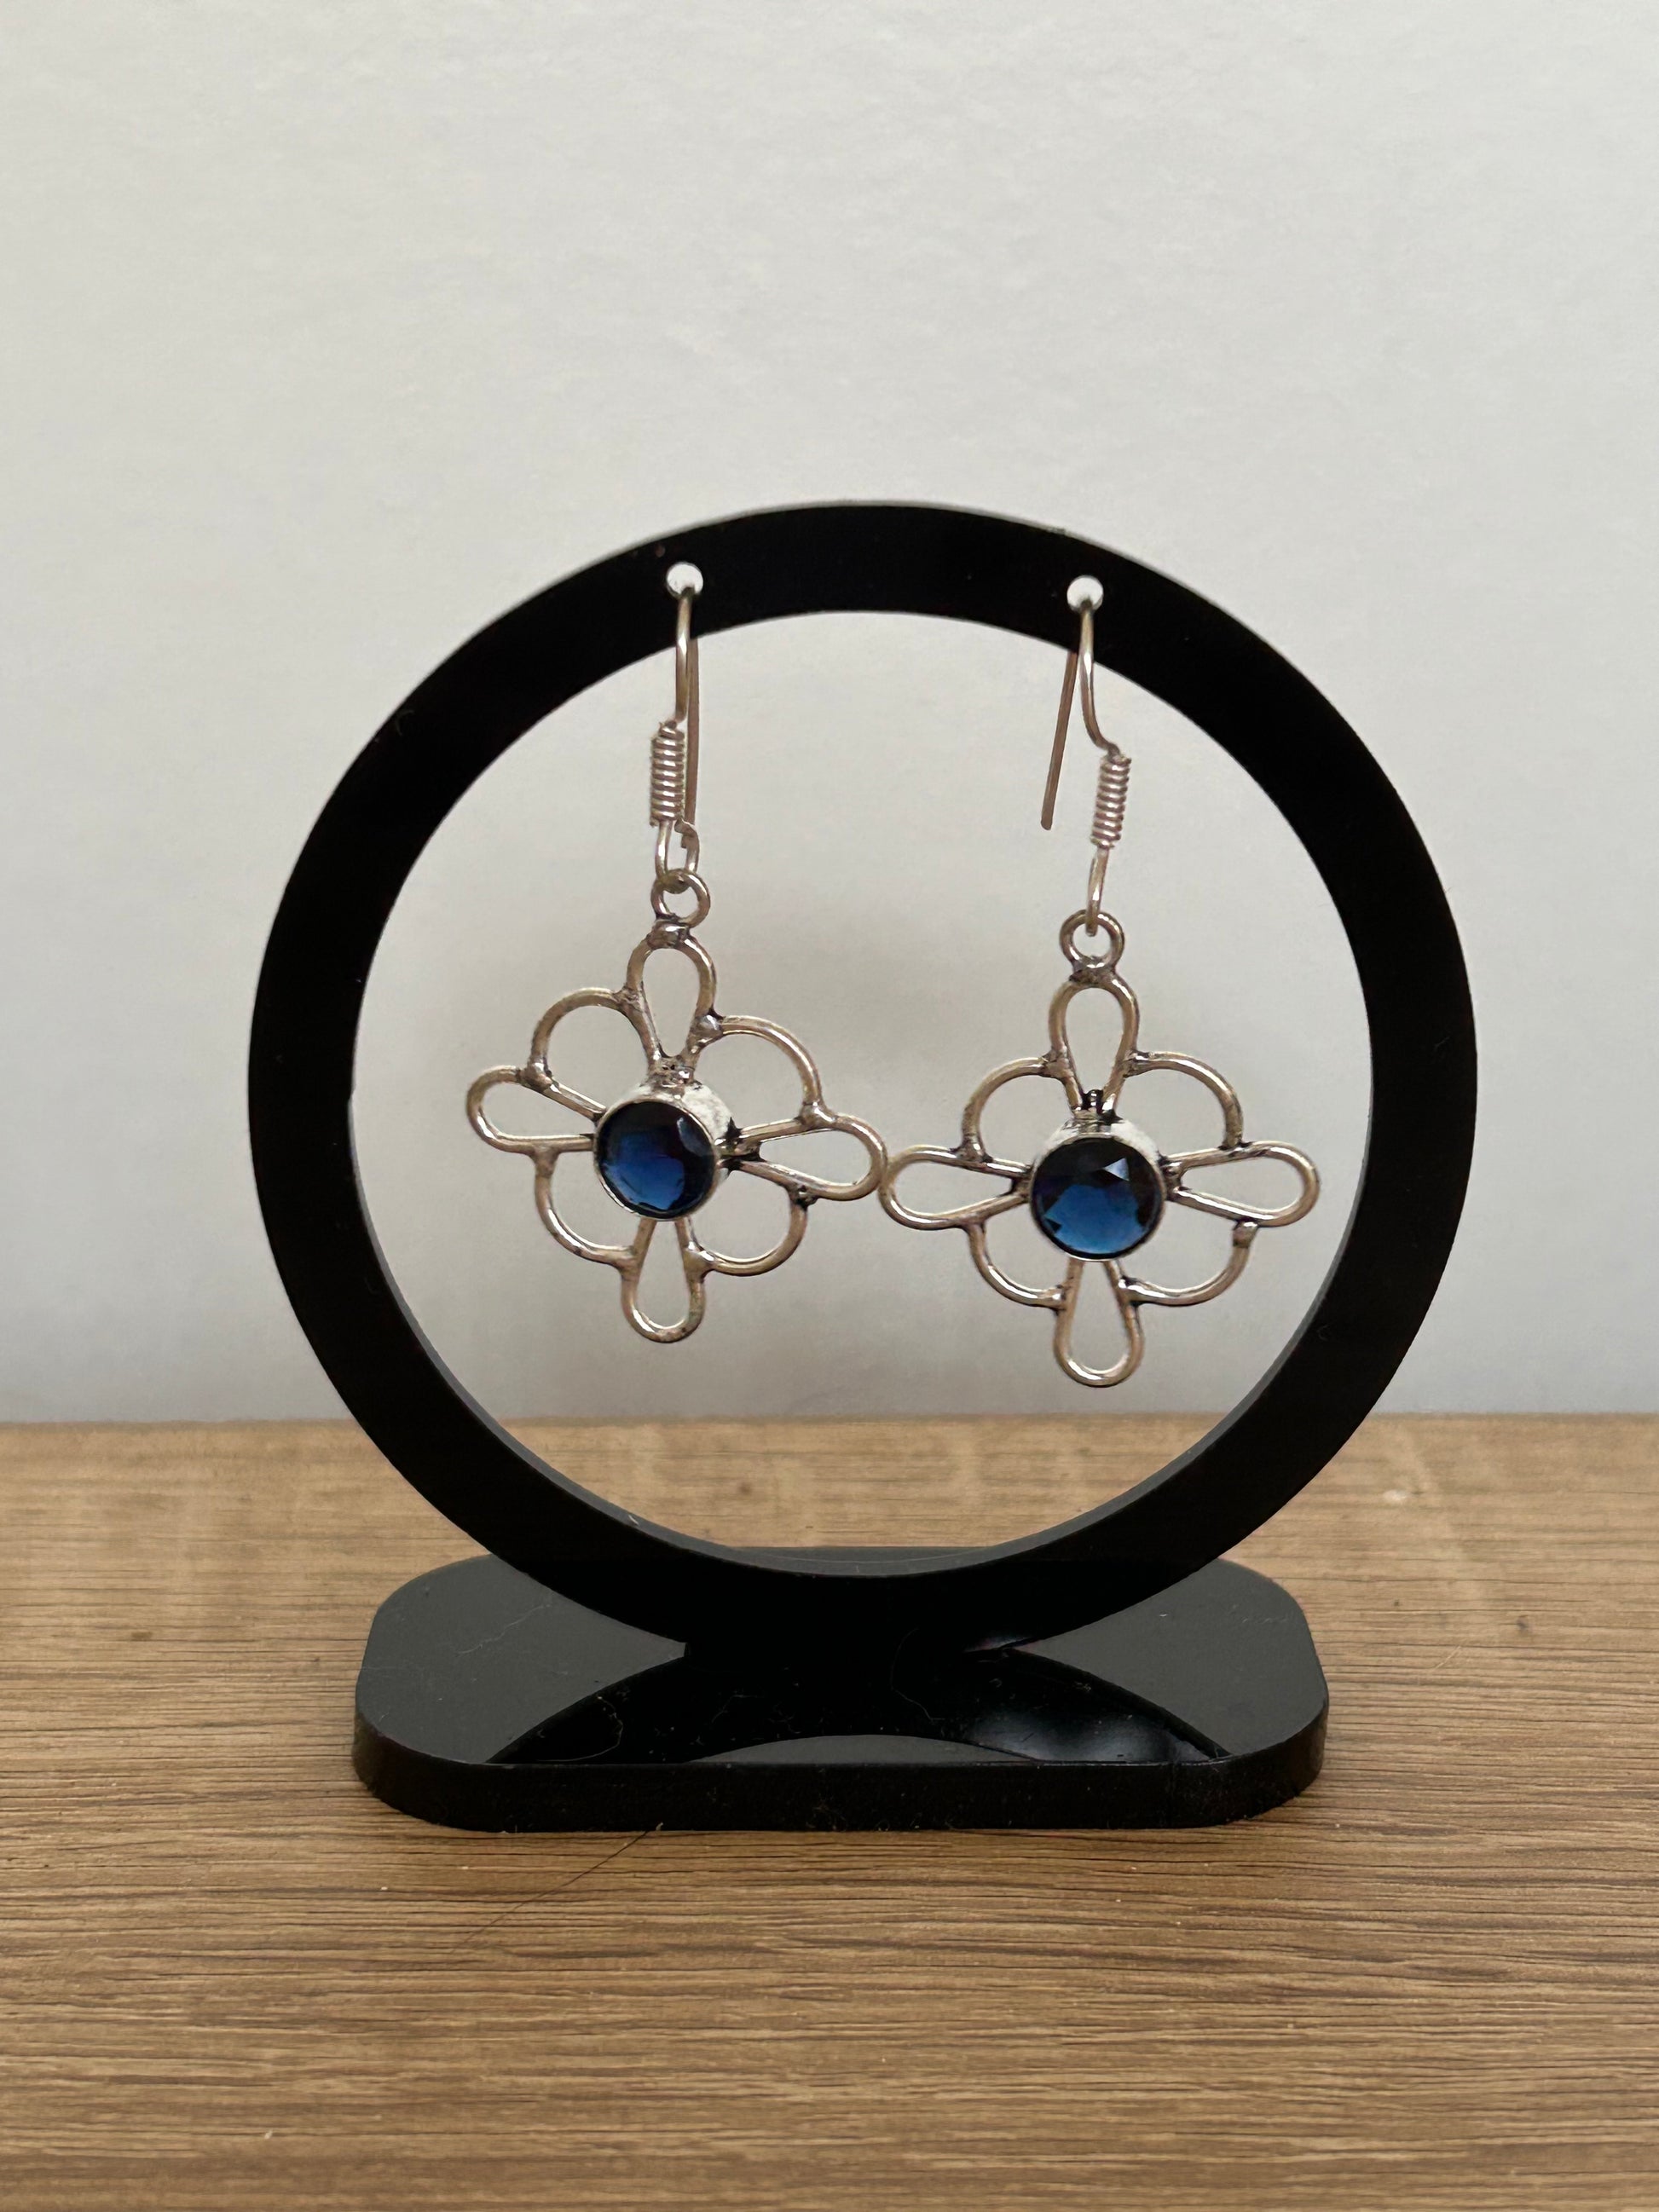 Faceted blue spinel handmade set in sterling silver flower shape drop earrings